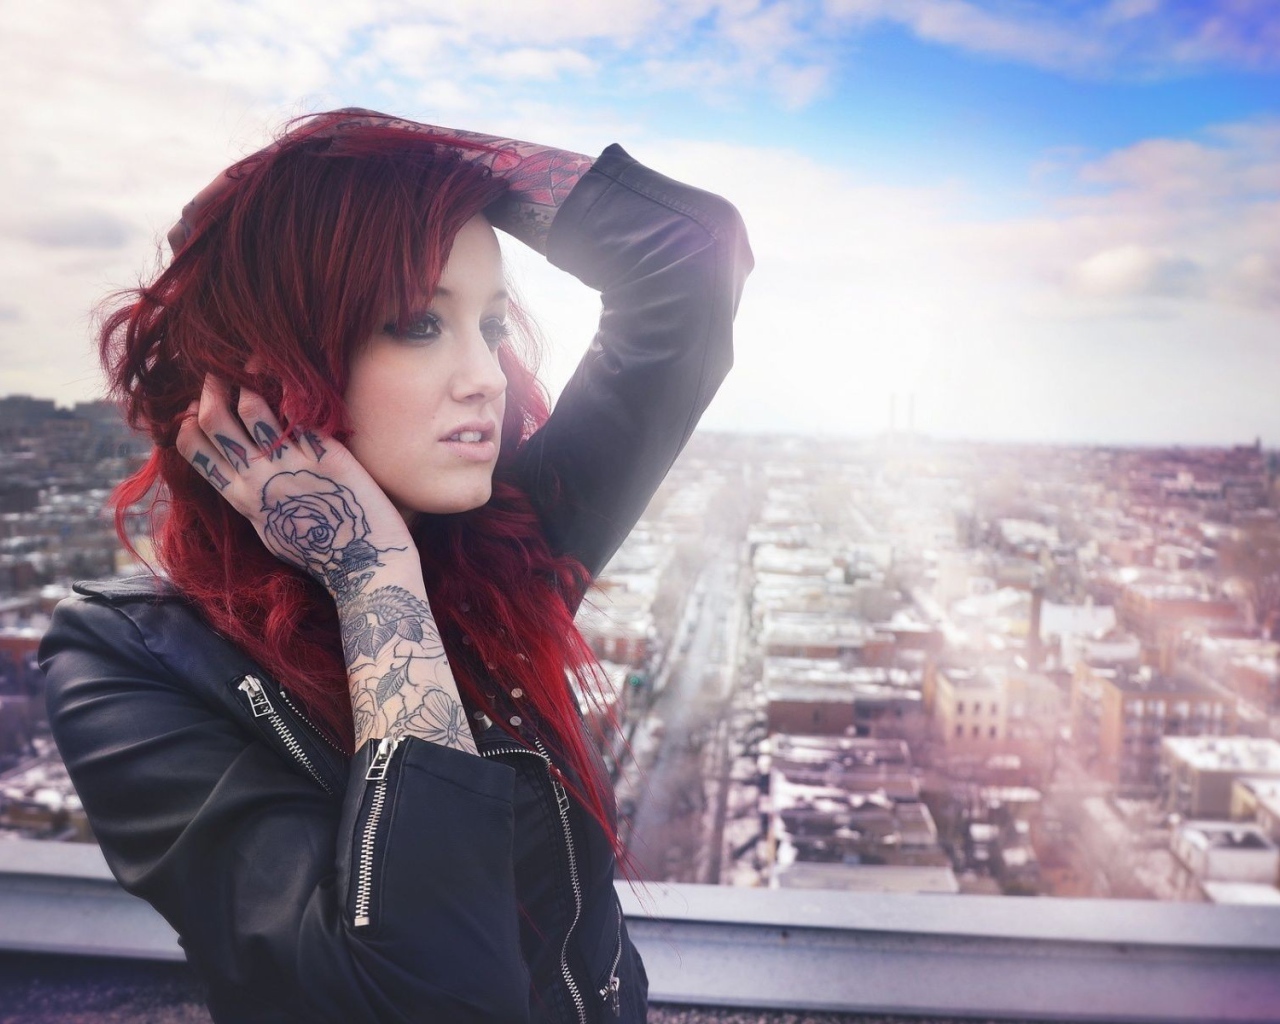 Tattoo rose on hand redhead girl